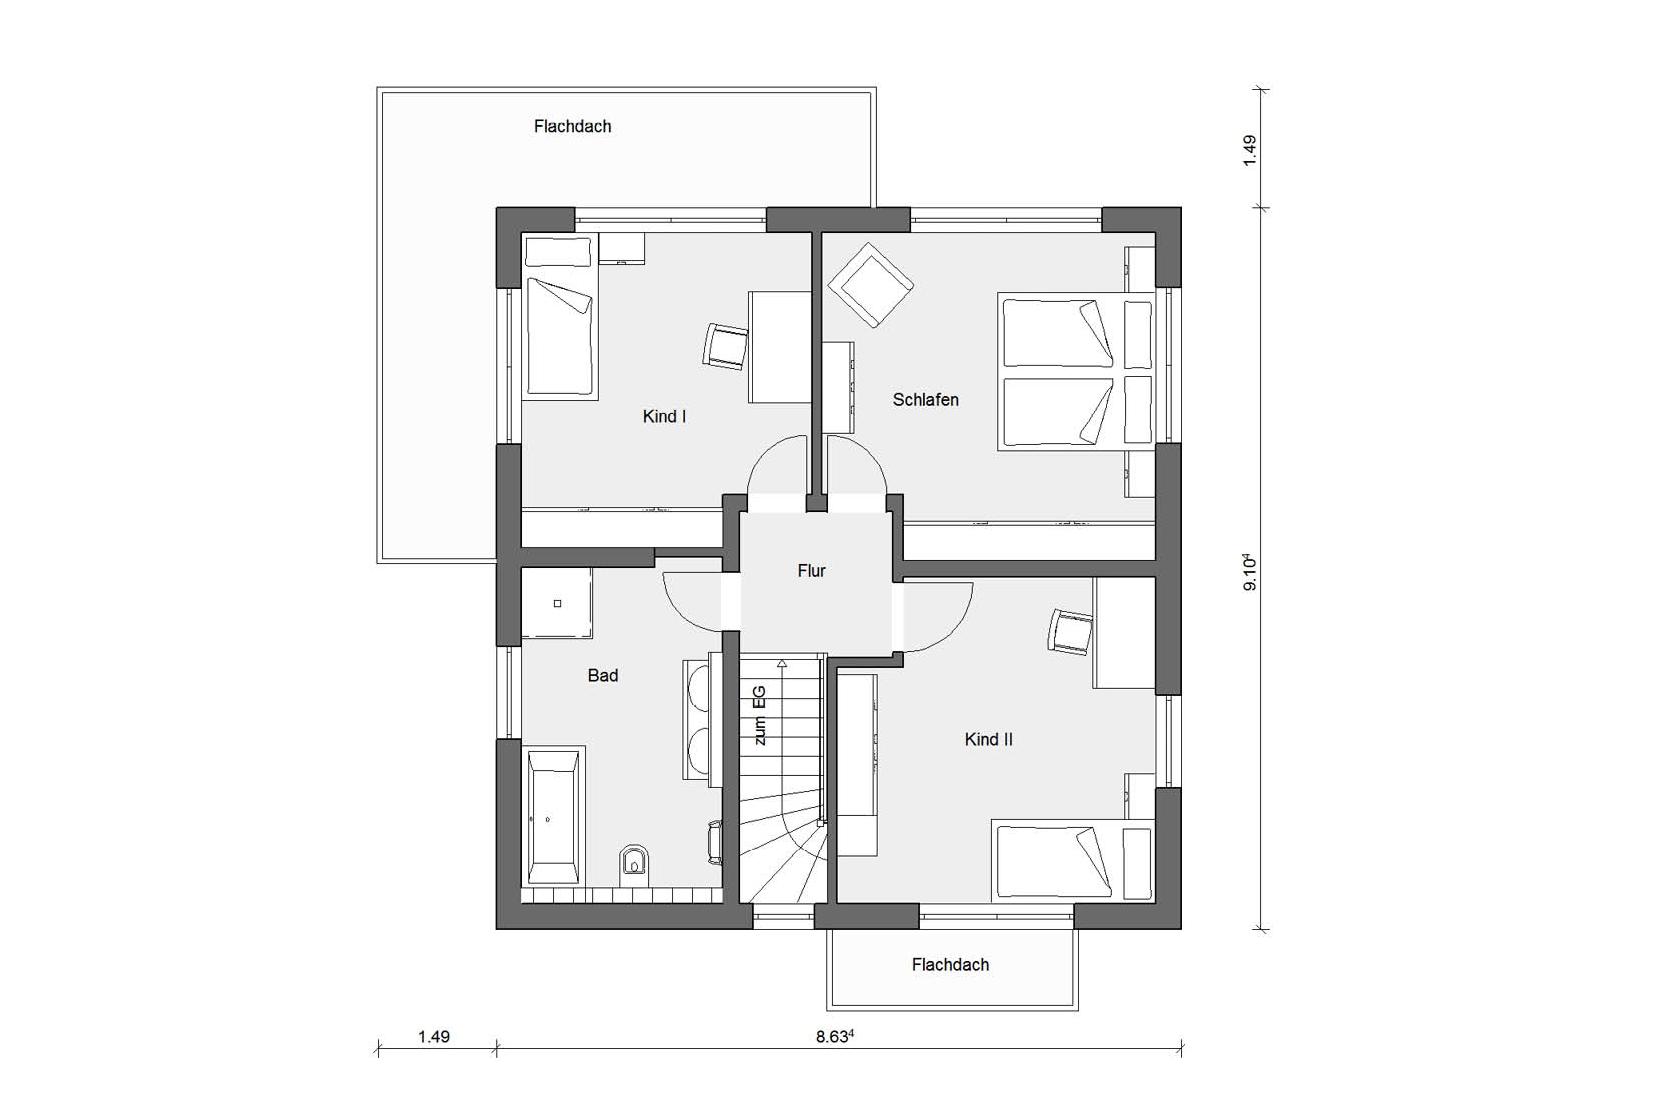 Ground floor attic E 20-142.3 Prefabricated Bauhaus style house